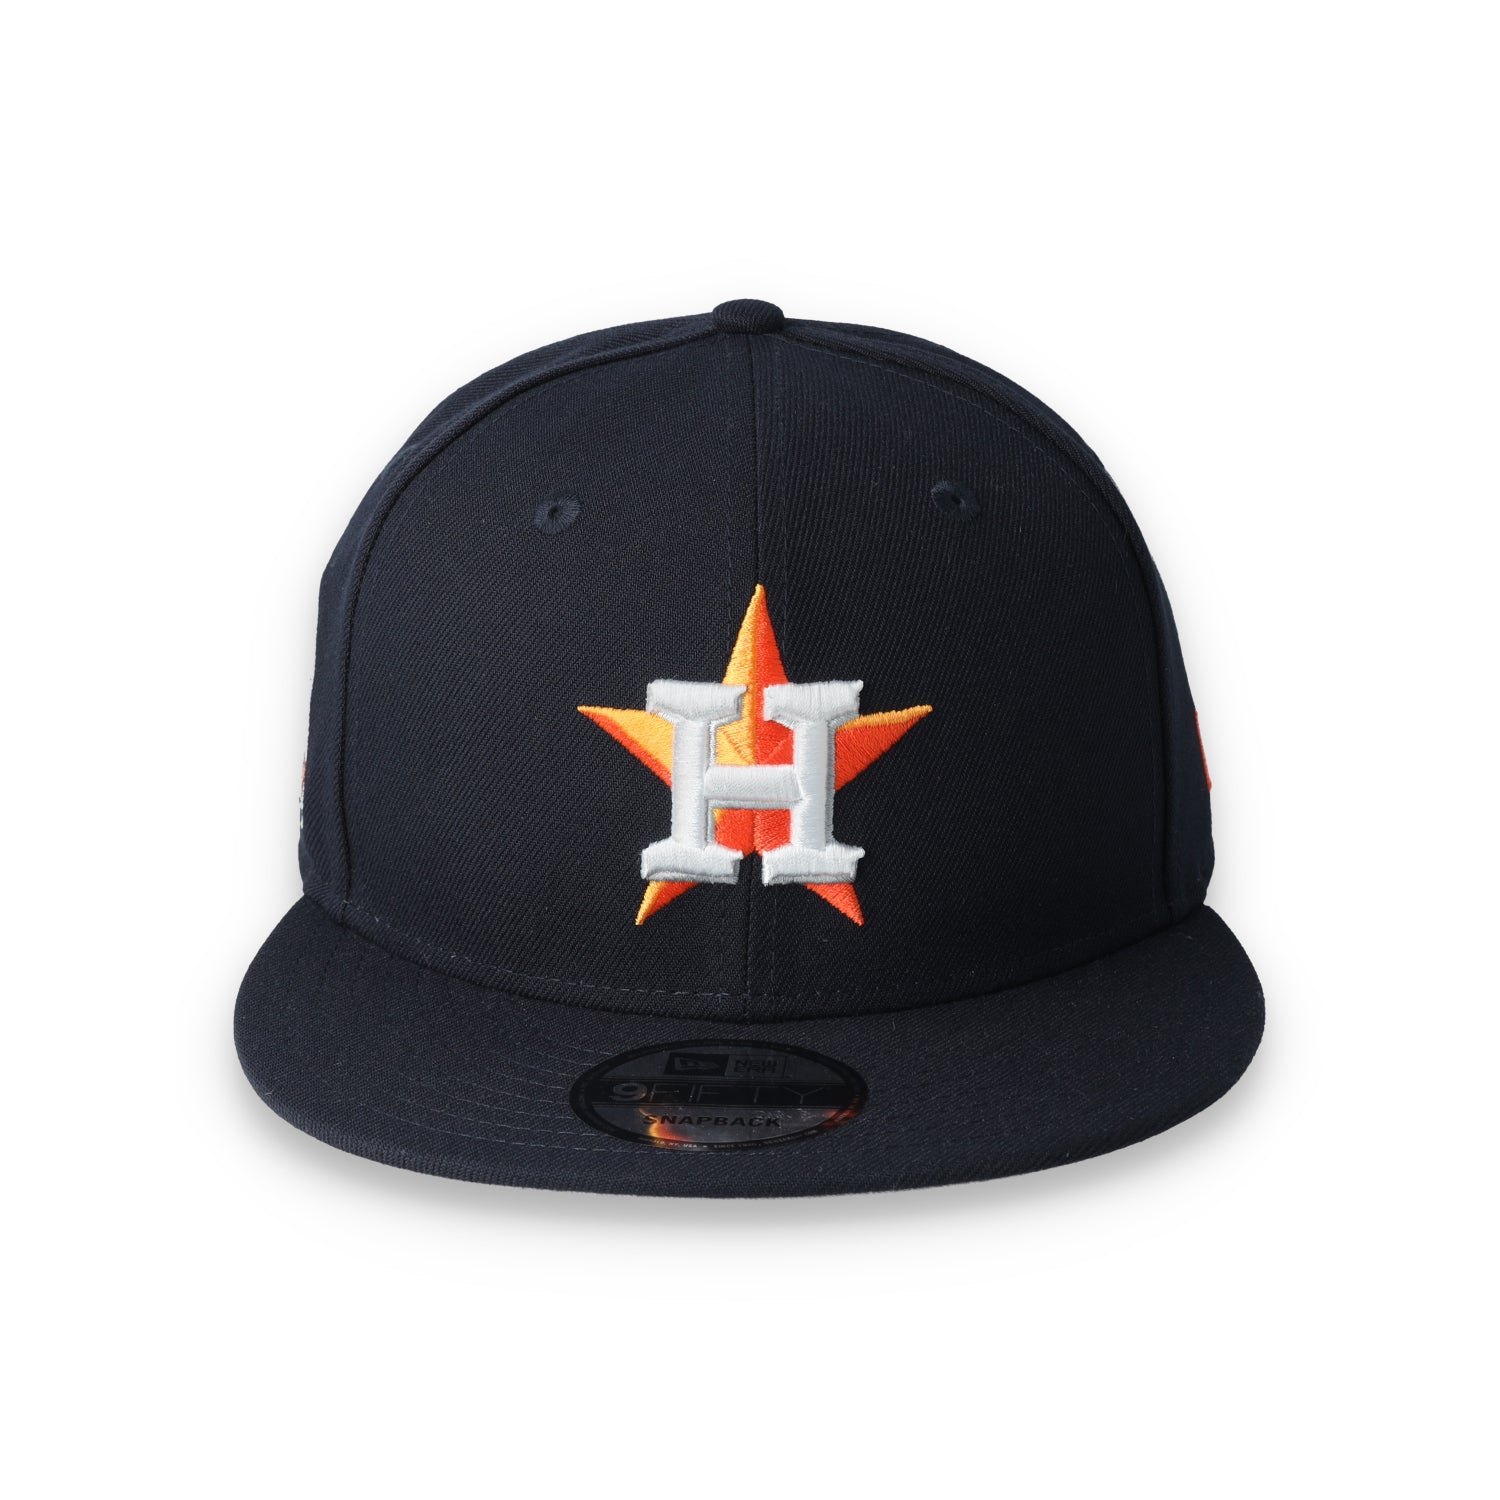 New Era Houston Astros Patch E3 9FIFTY Snapback Hat